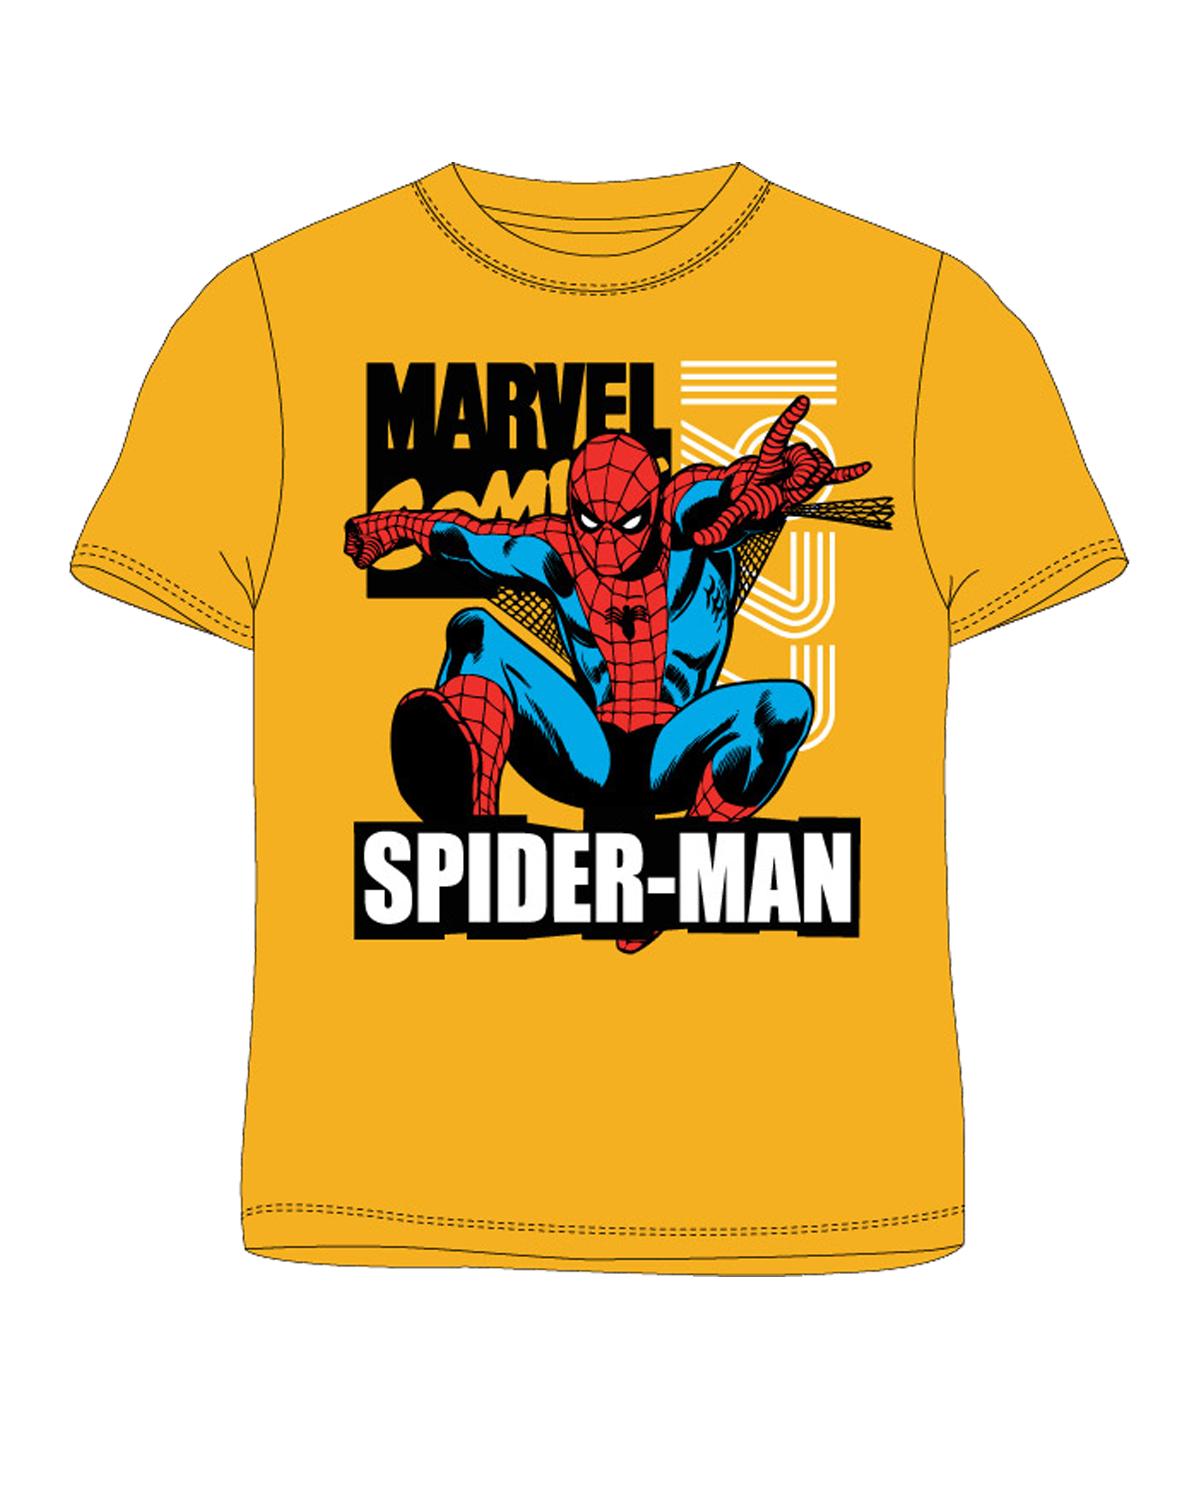 Spider Man - licence Chlapecké tričko - Spider-Man 52021447, žlutá Barva: Žlutá, Velikost: 104